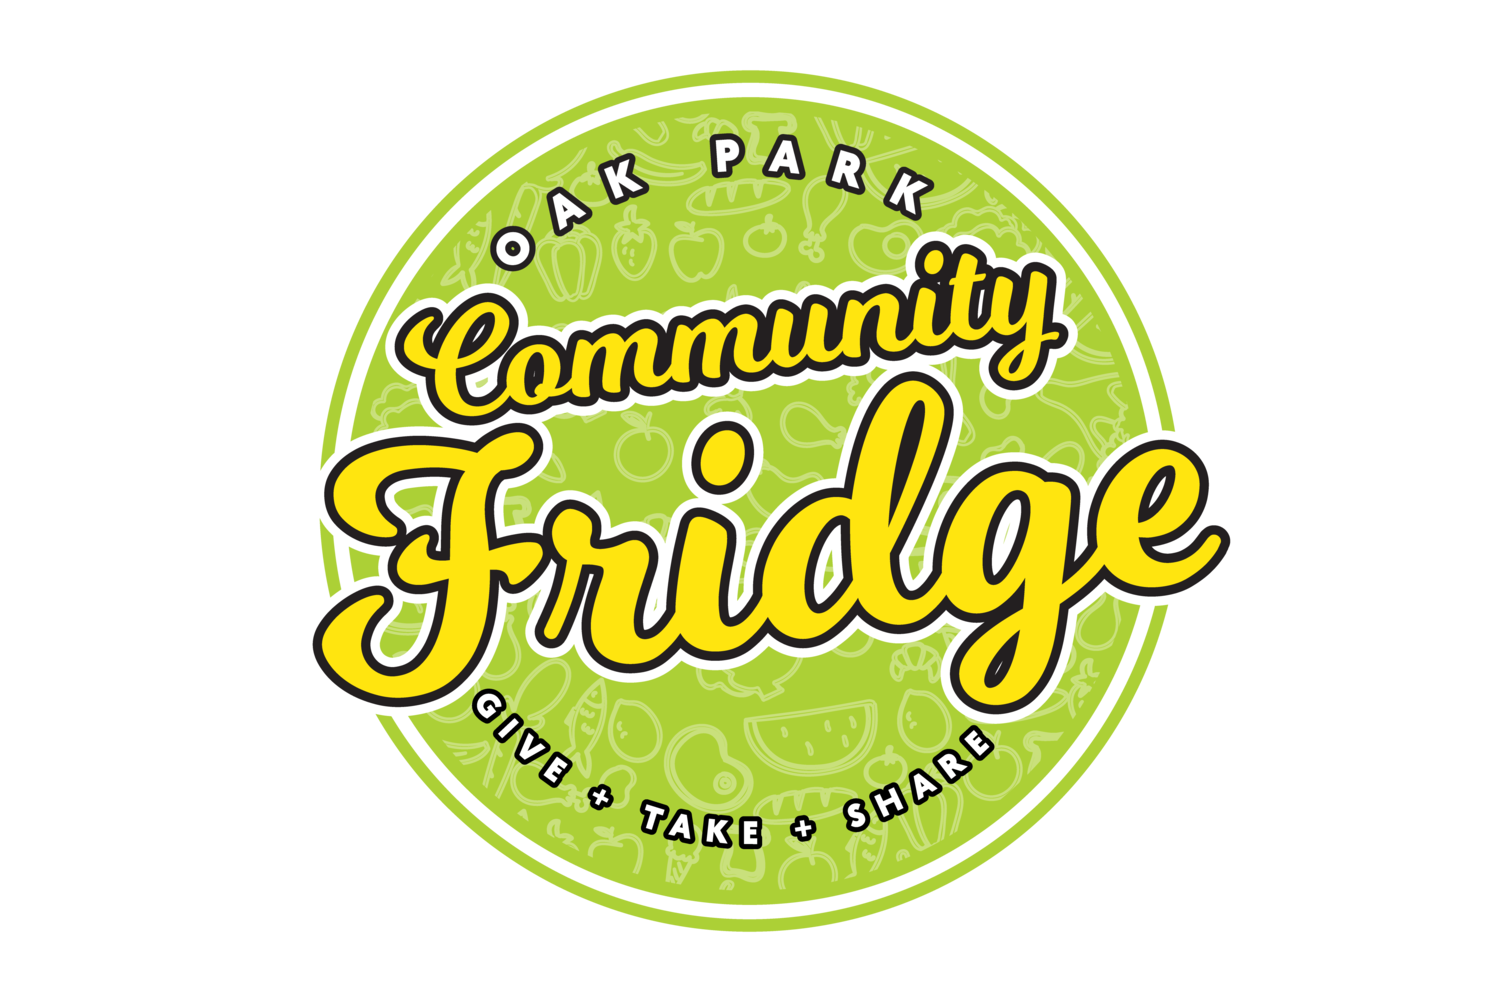 contact-us-oak-park-community-fridge